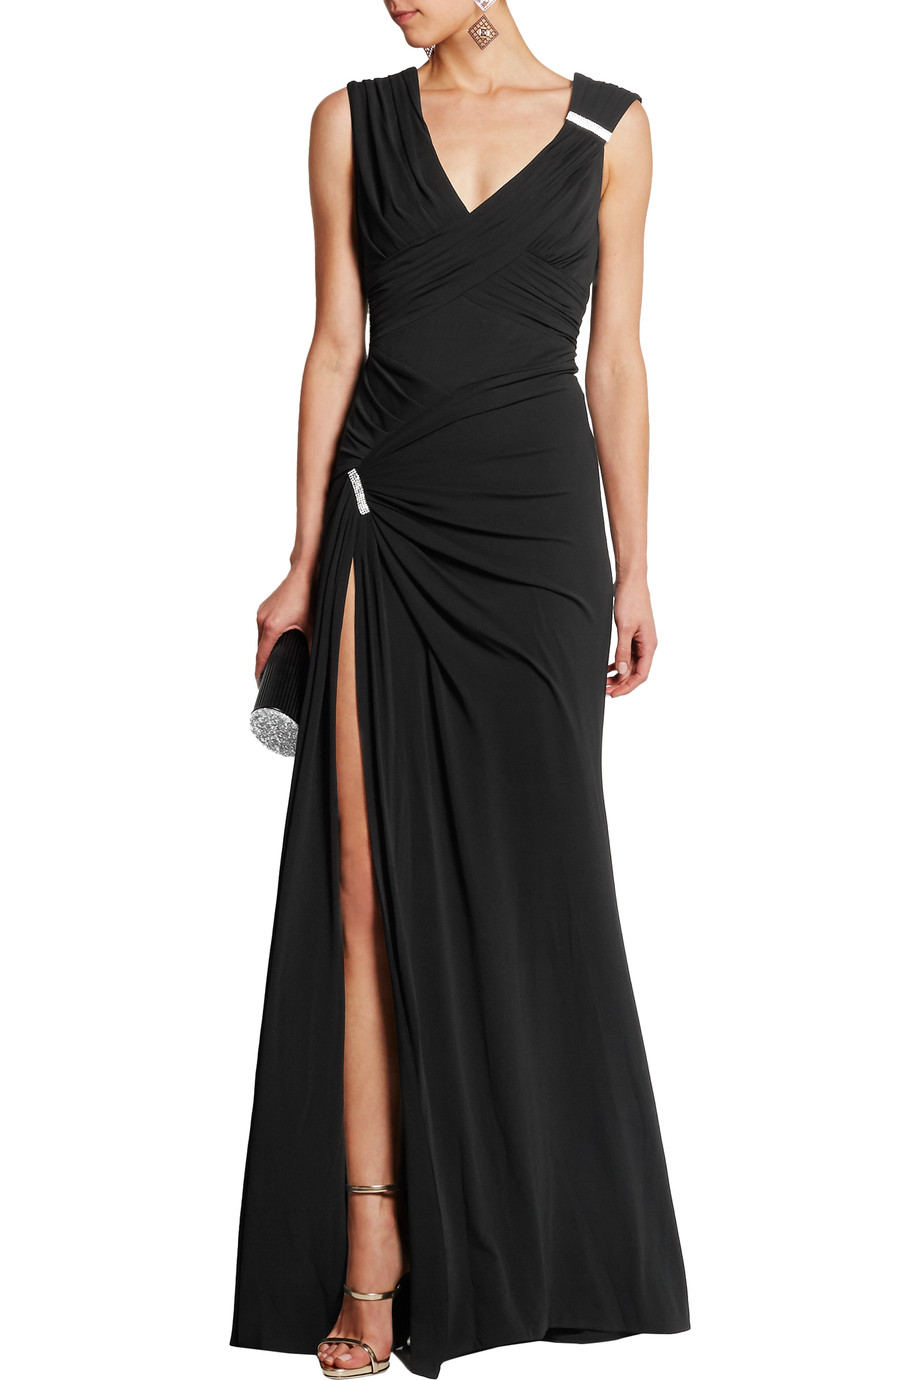 Versace Gown.jpg